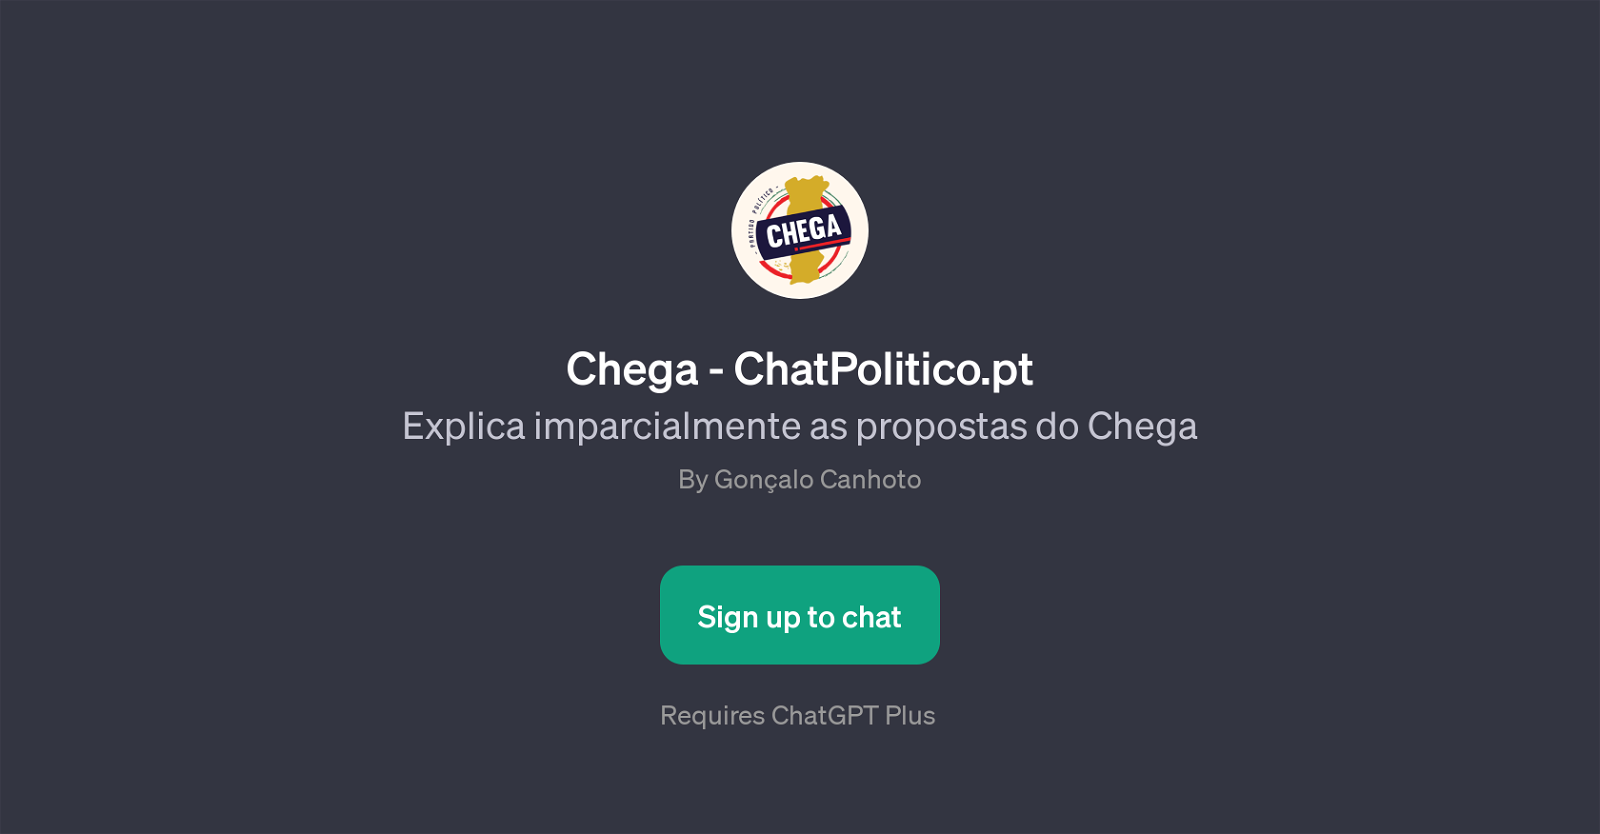 Chega - ChatPolitico.pt website